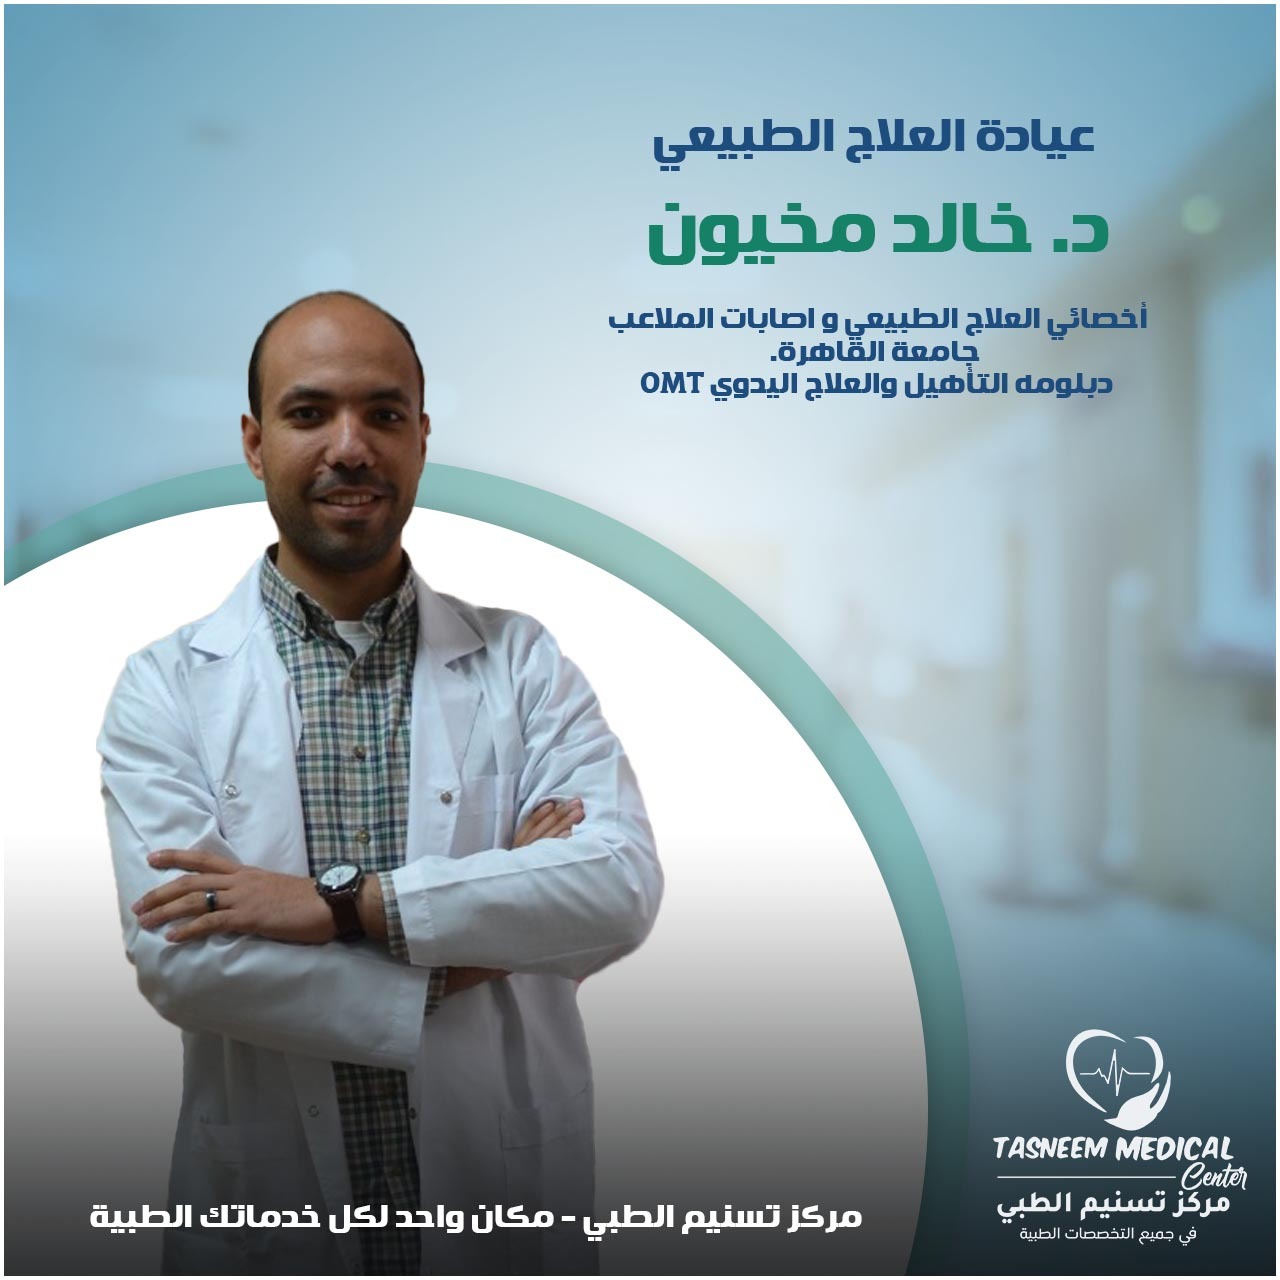 Dr. khaled makhyoun